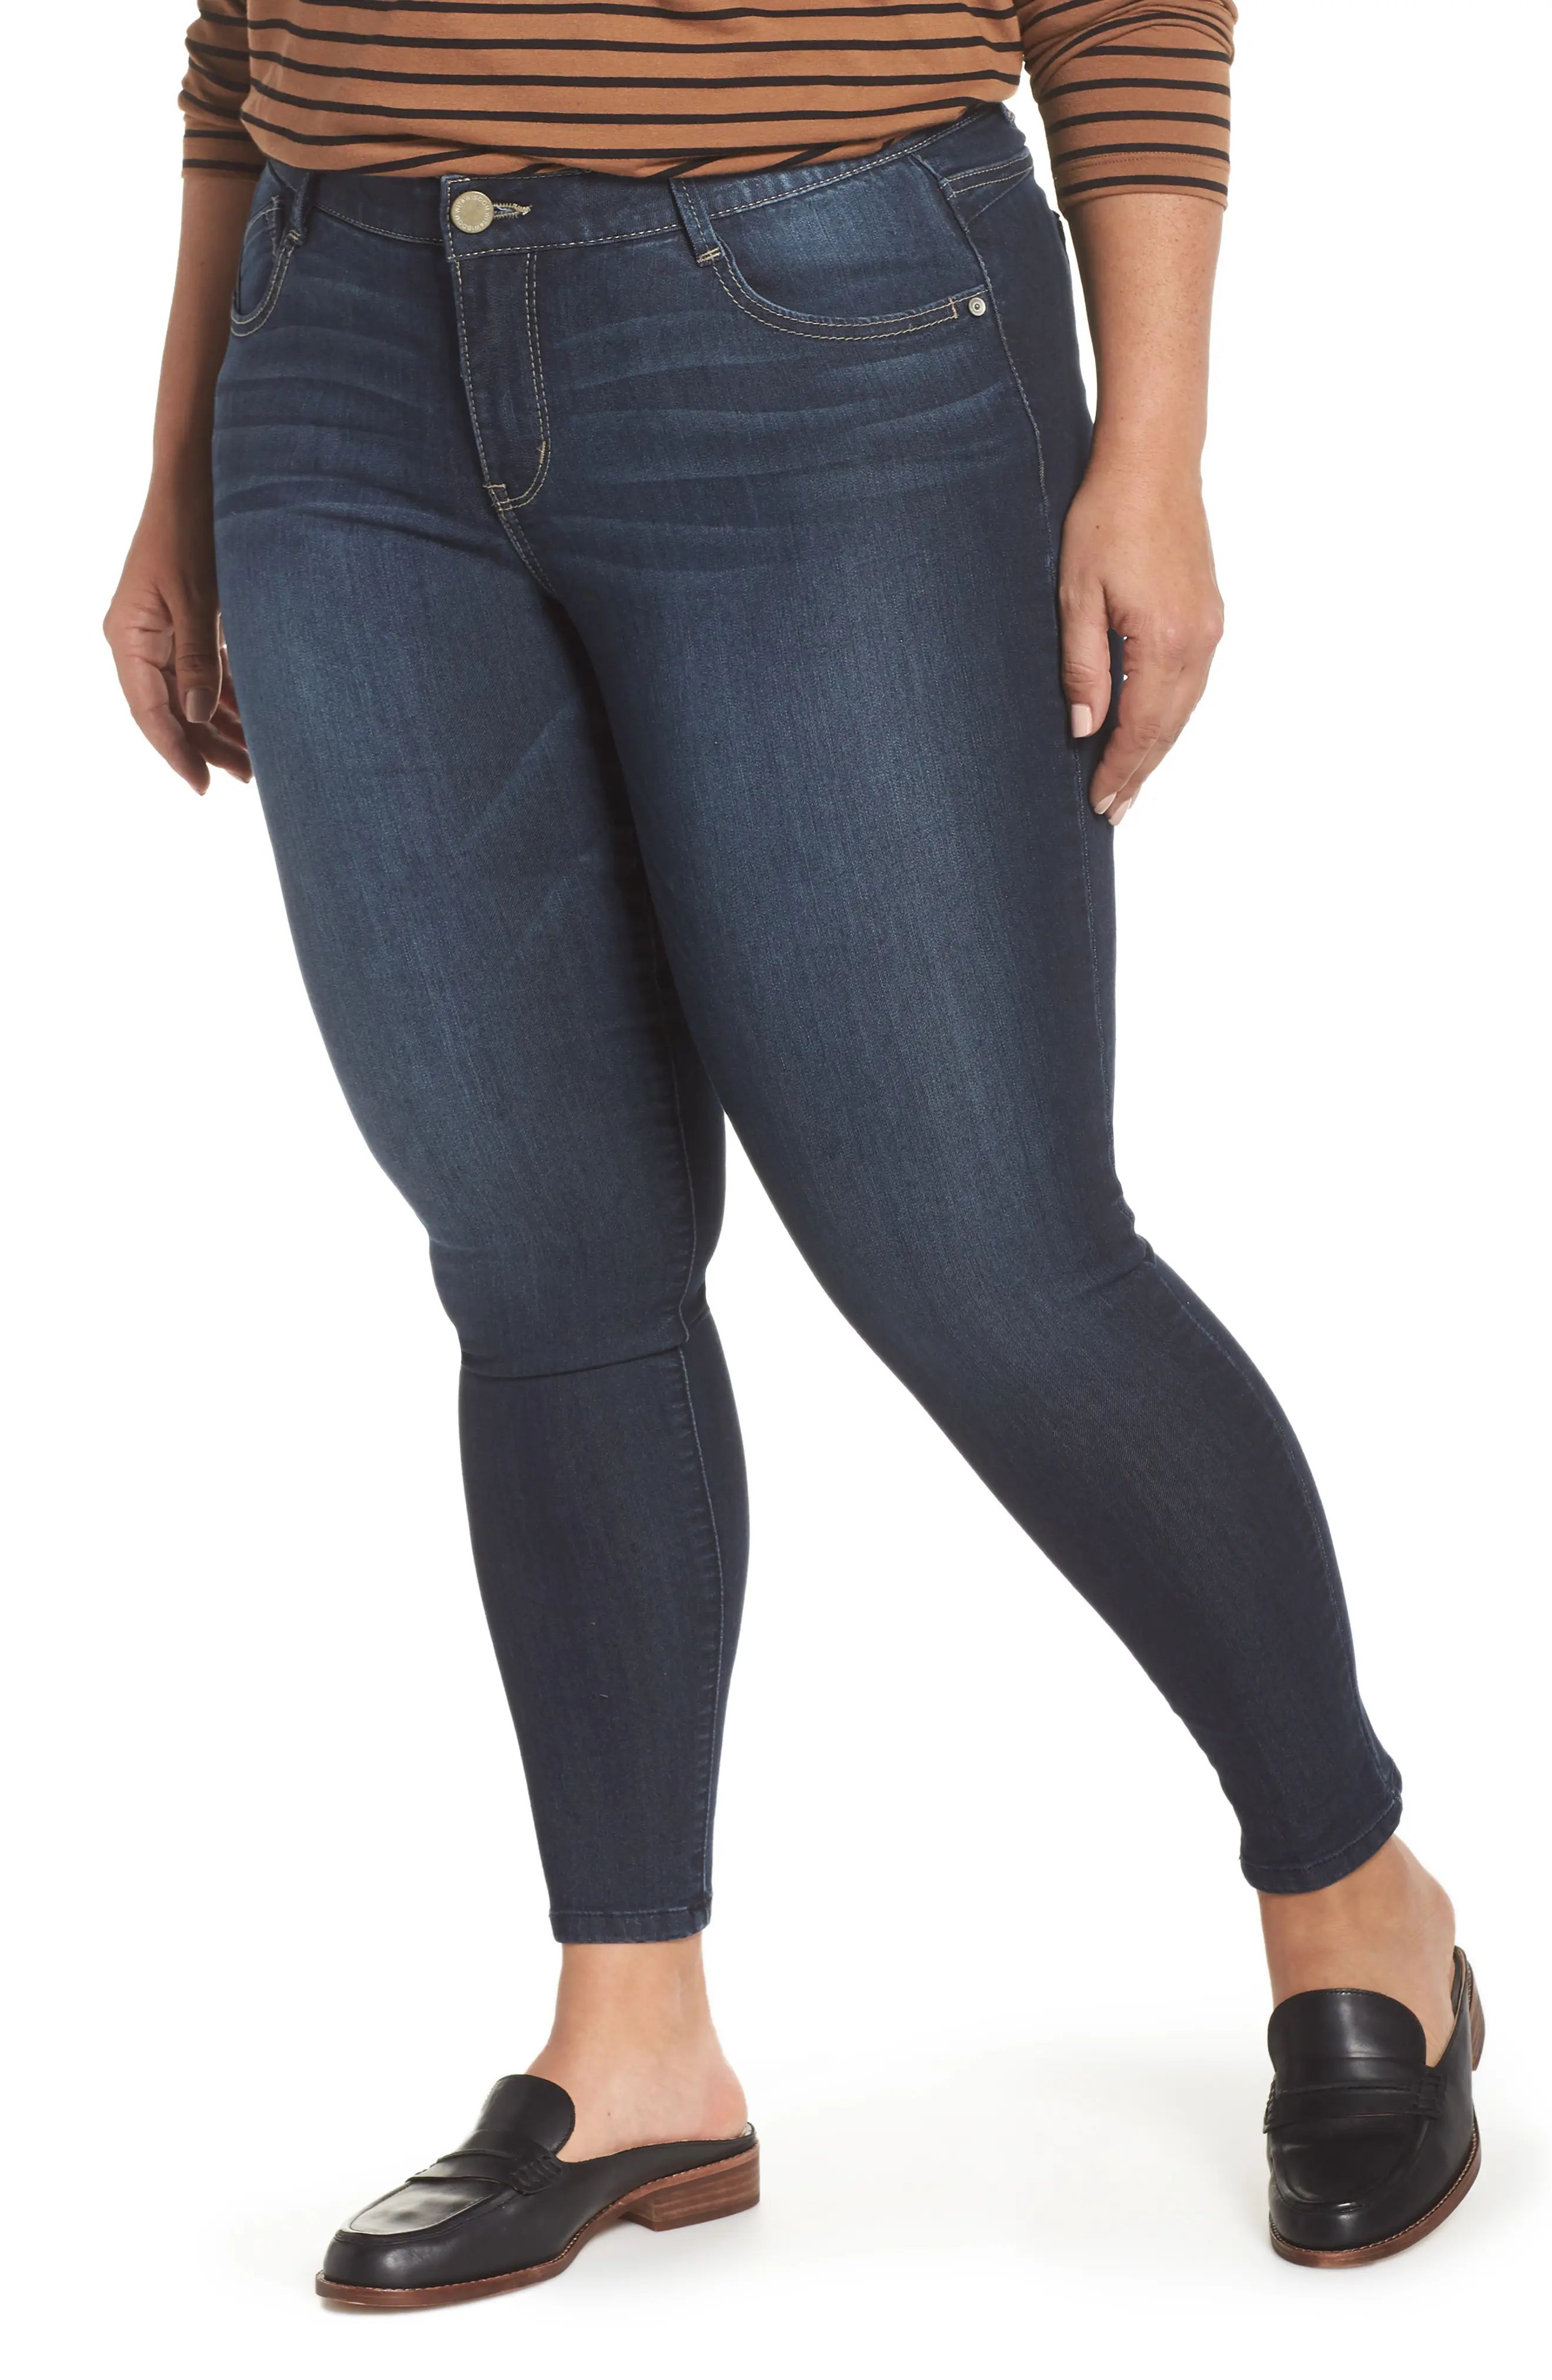 Wit & Wisdom Ab-solution Stretch Skinny Jeans in Indigo at Nordstrom, Size 16W | Nordstrom